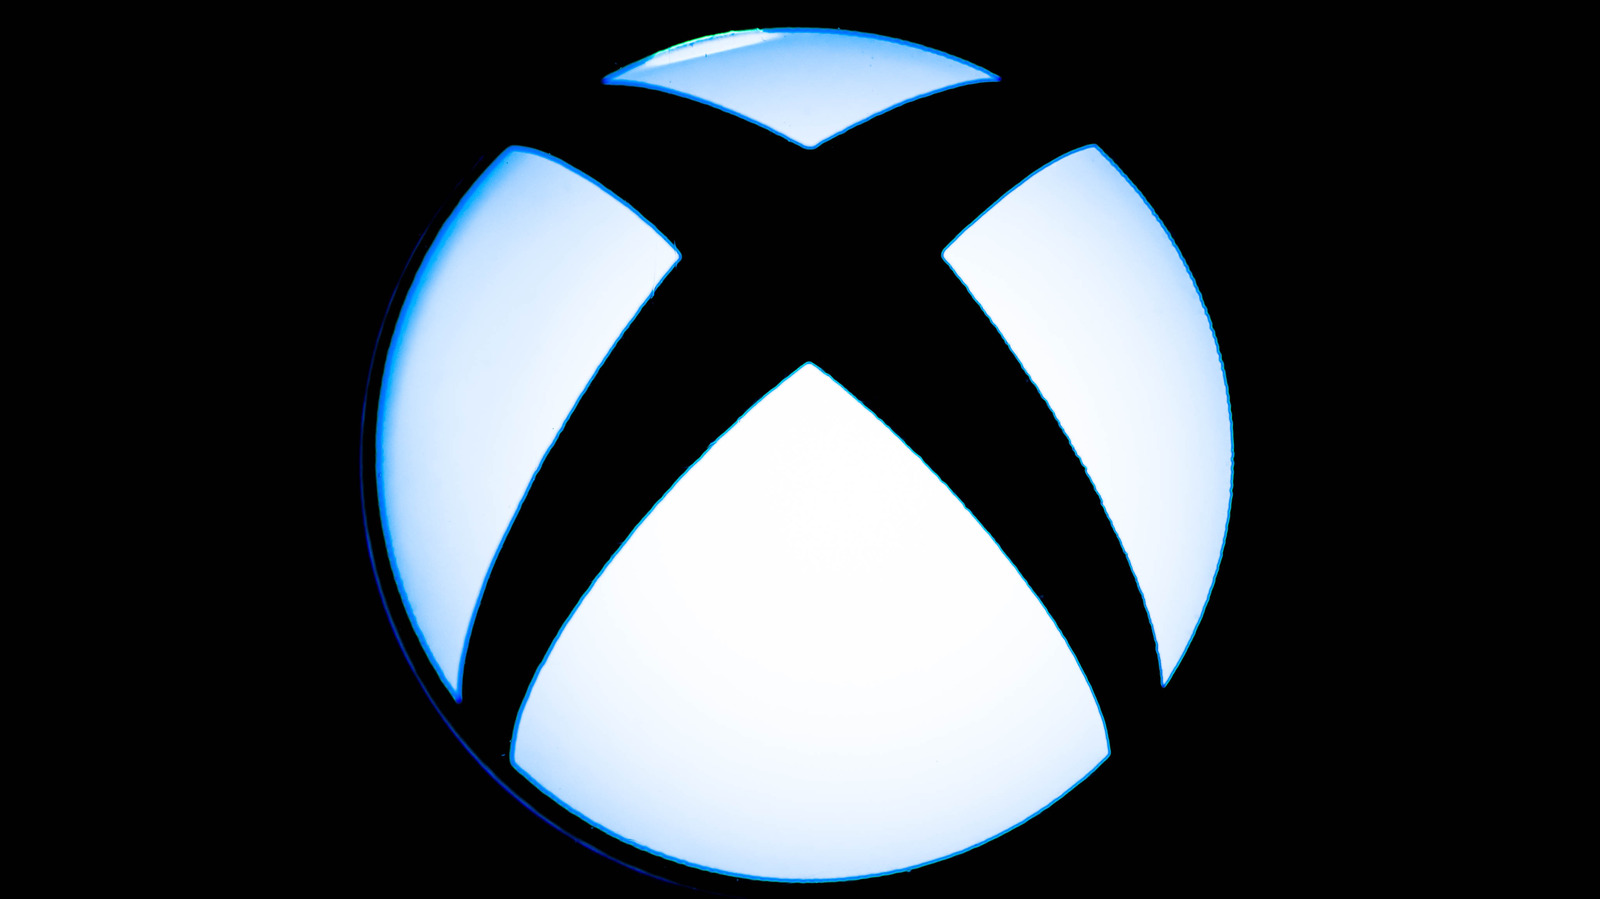 Xbox Boss Wants Fortnite PS4 / Xbox One Cross-Play, Developer Agrees -  GameSpot